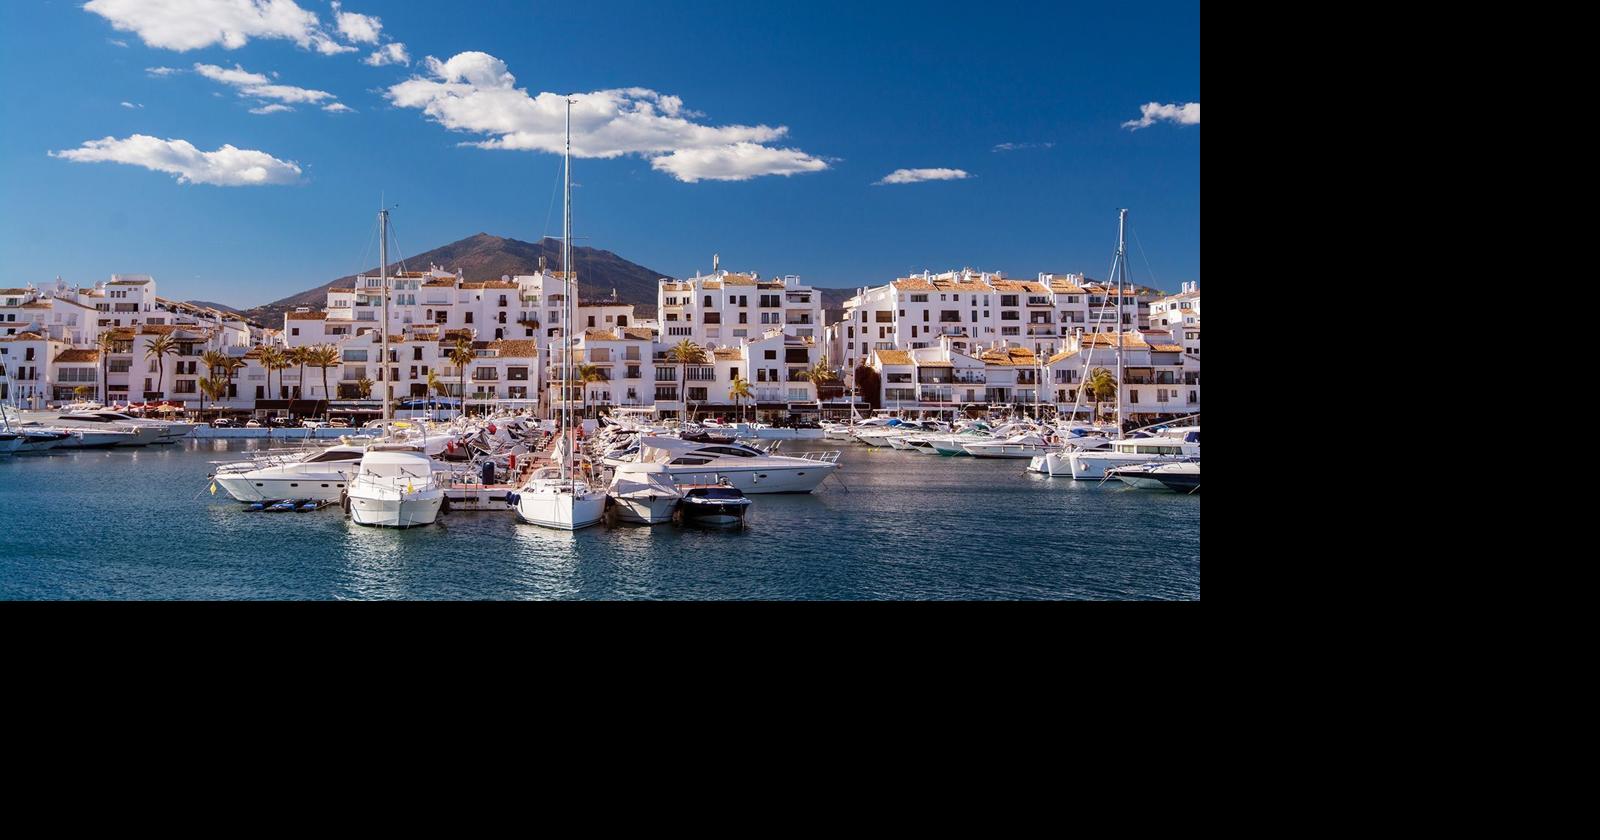 View along the beach, Puerto Banus, Marbella, Costa del Sol, Malaga  Province, Andalucia, Spain, Western Europe Stock Photo - Alamy